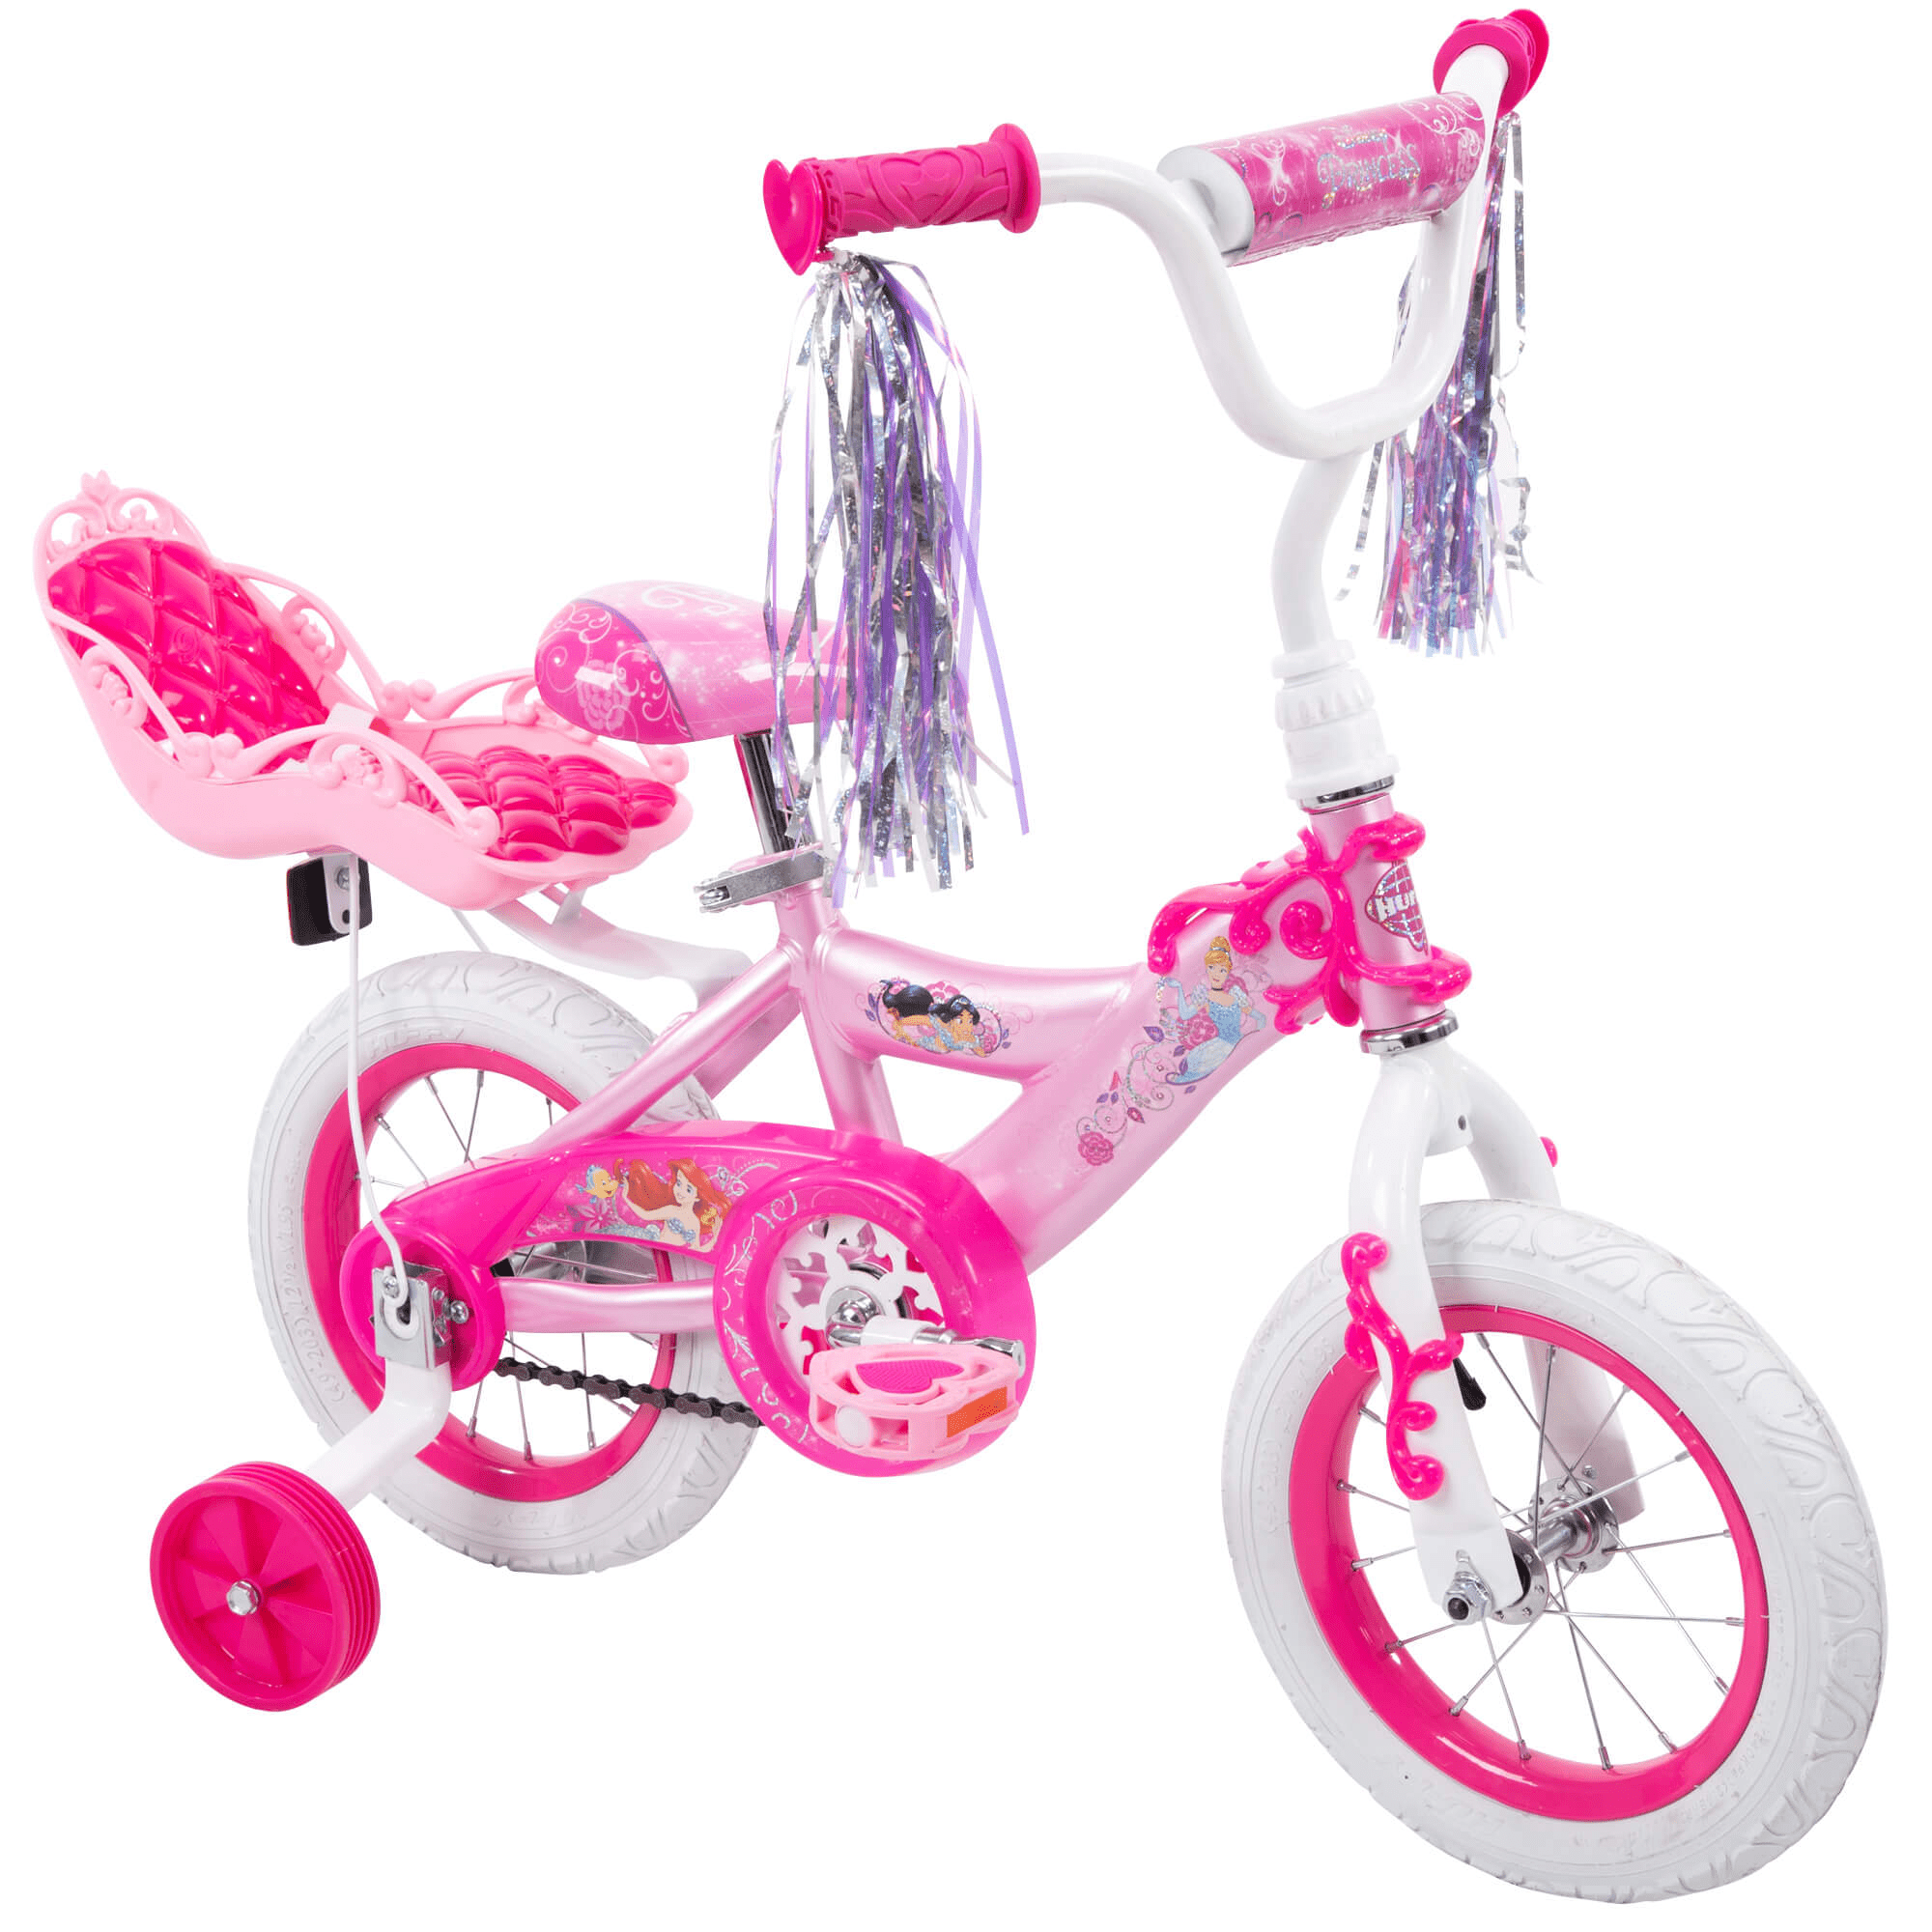 Princess Pink Bike For Girls 12 Inch Training Wheels Starter Bicycle New 